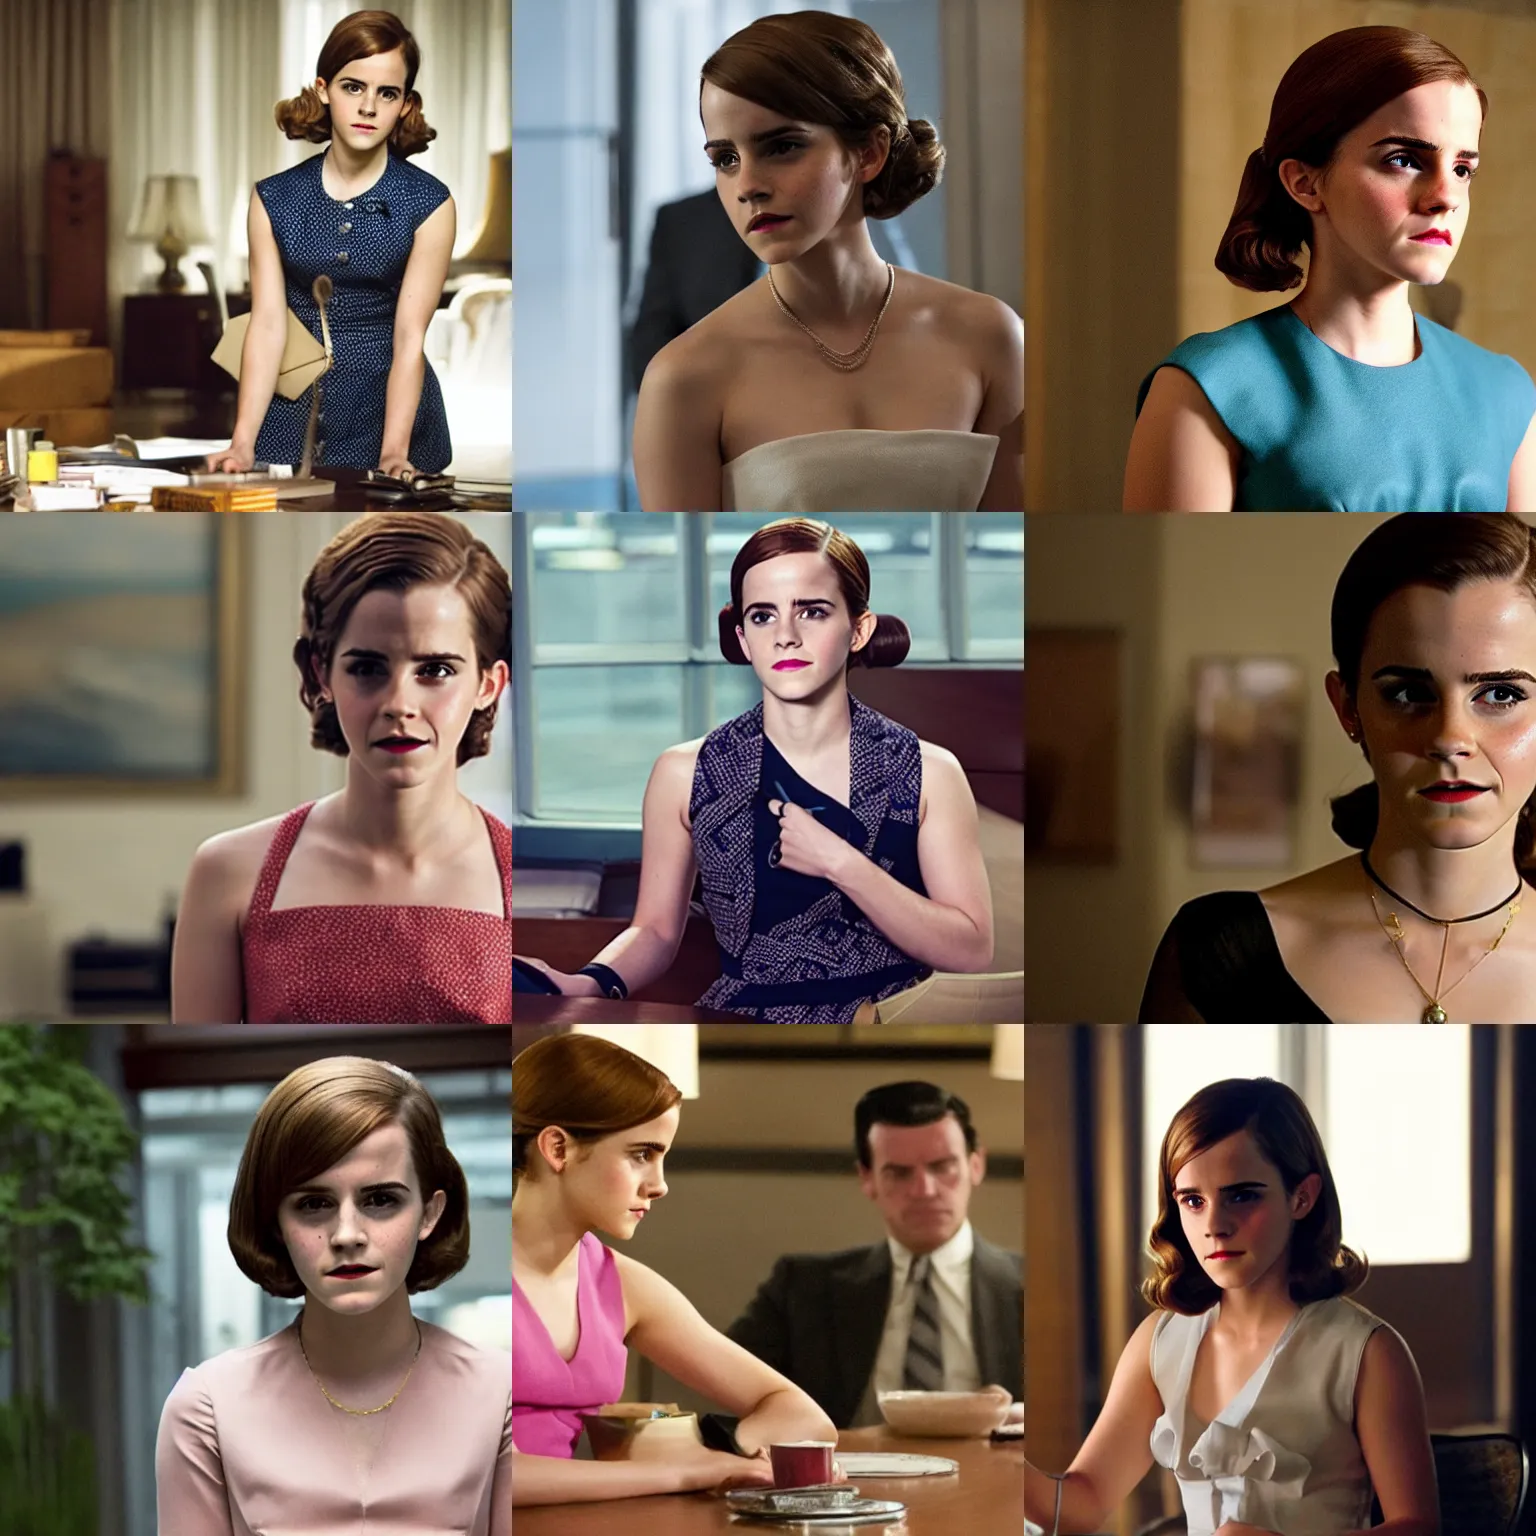 Prompt: Movie still of Emma Watson in Mad Men